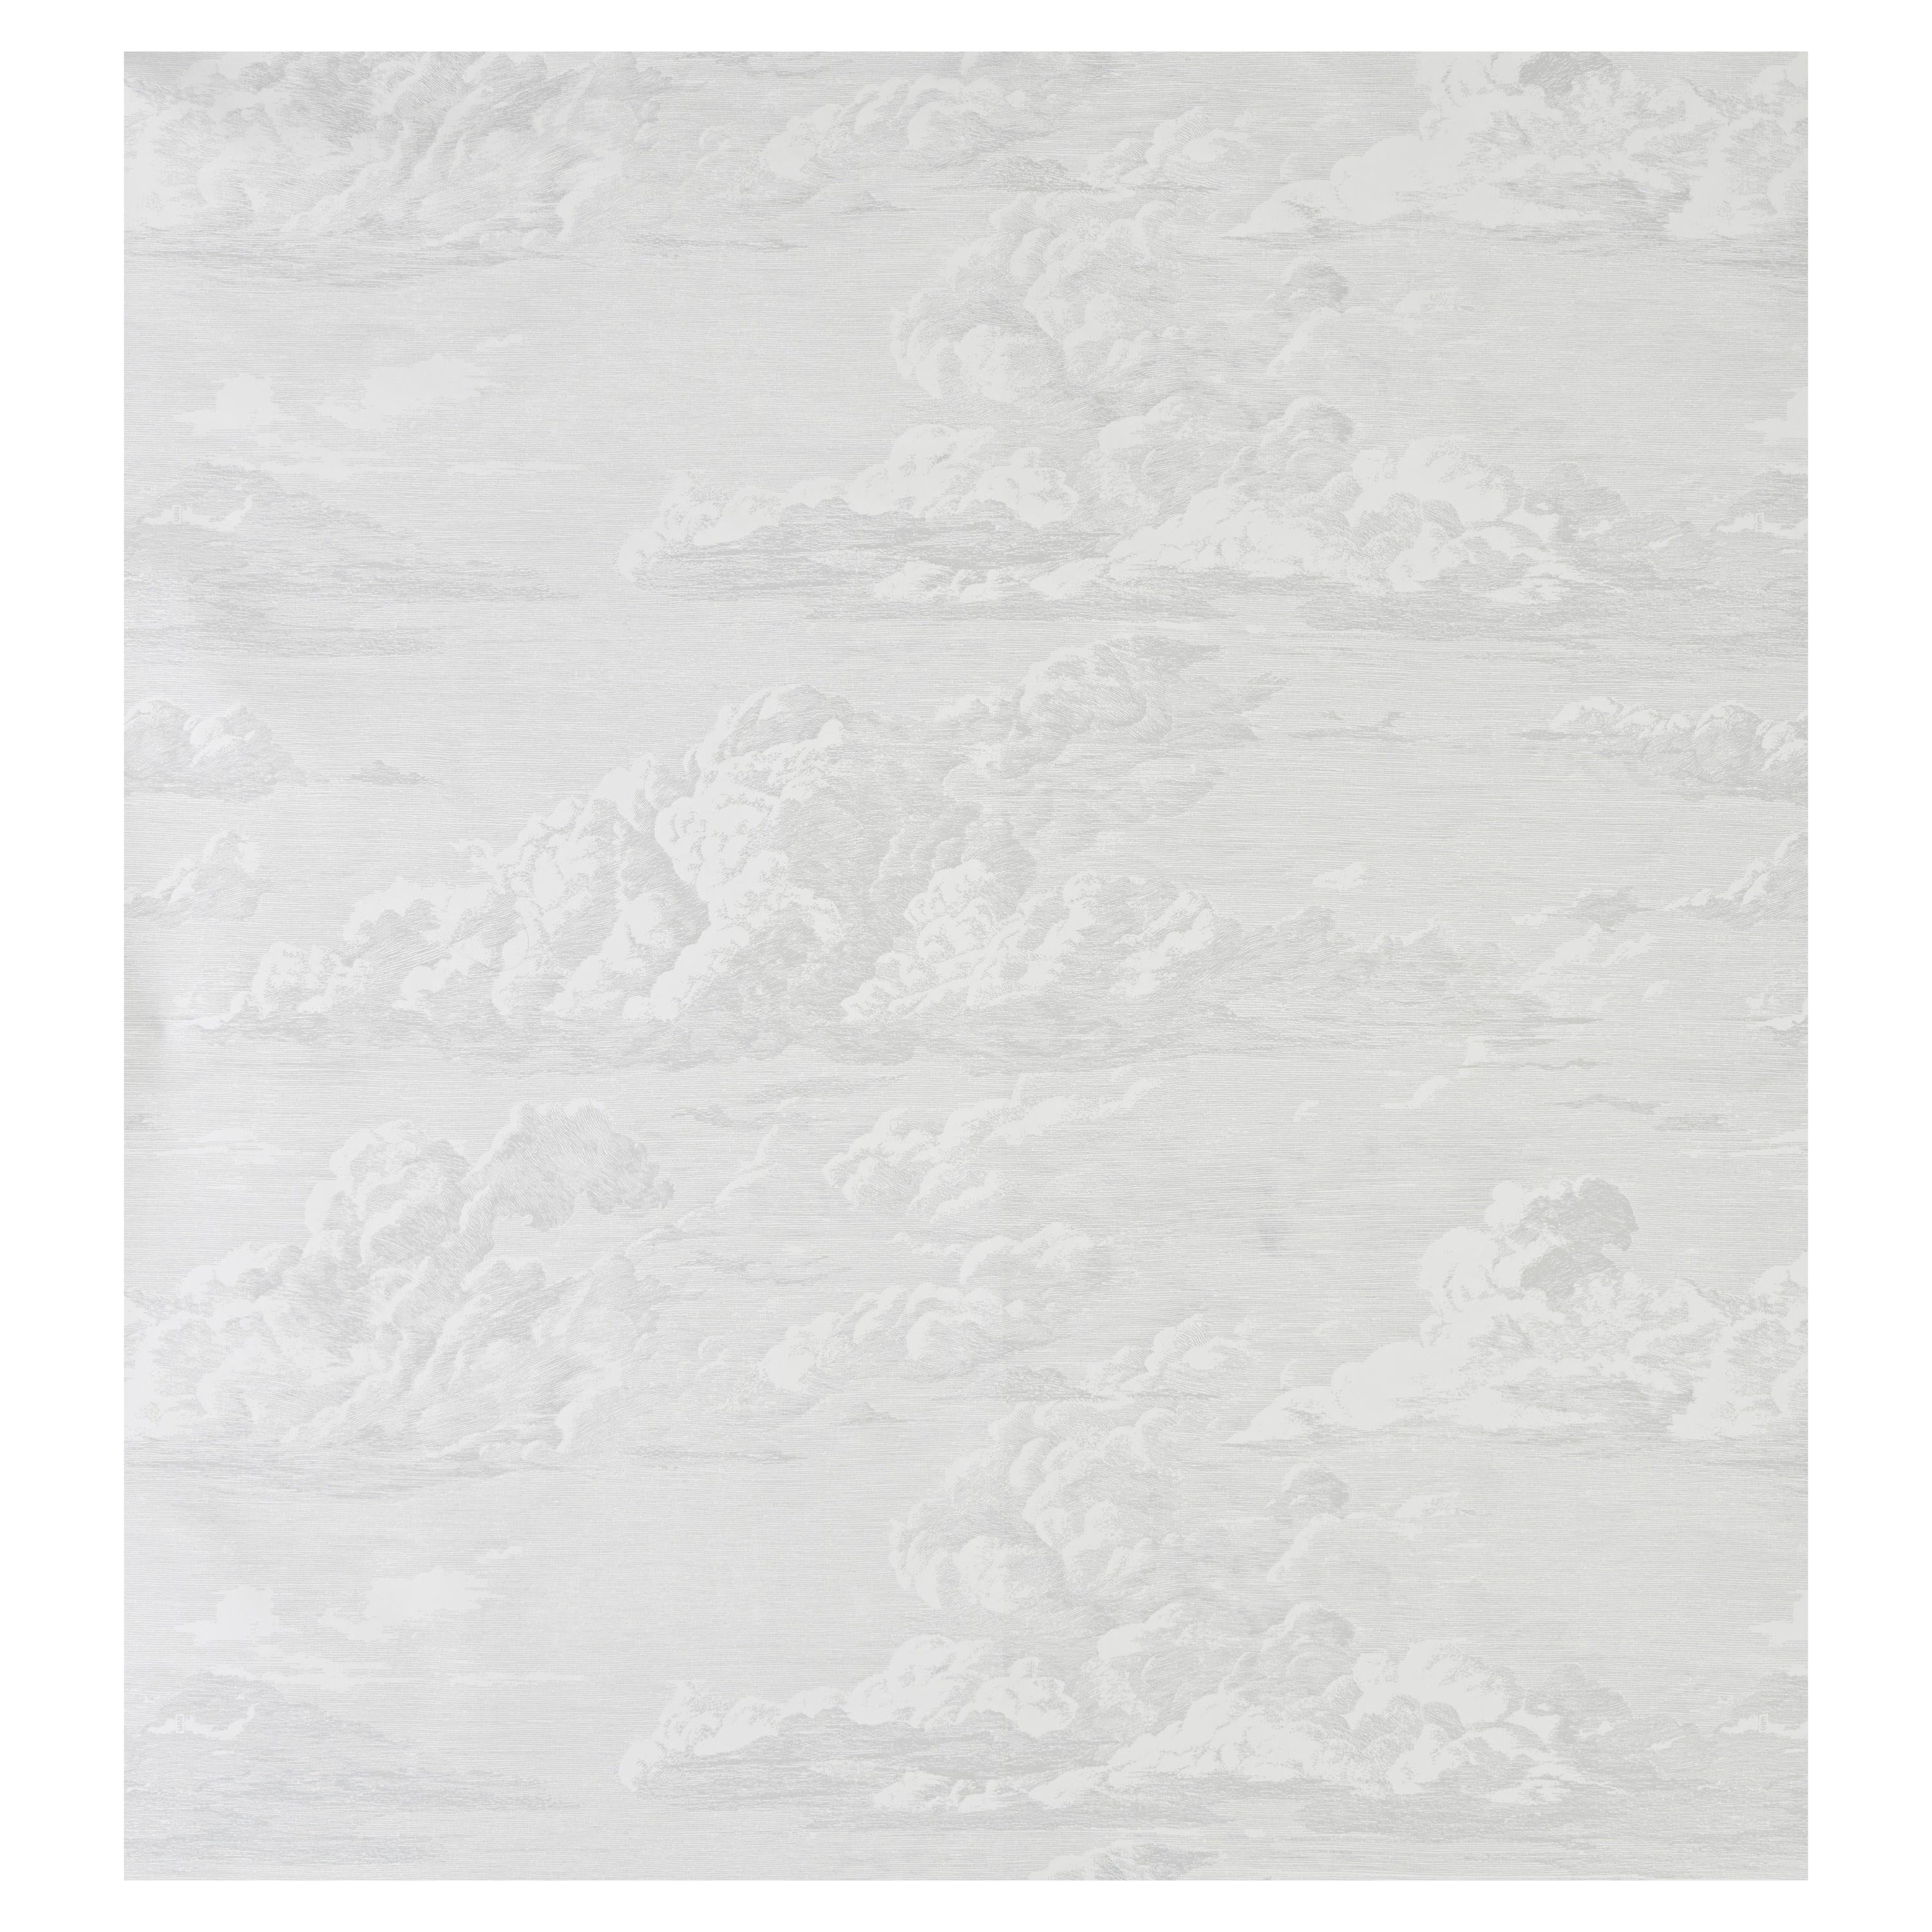 Schumacher Cloud Toile Wallpaper in Quartz